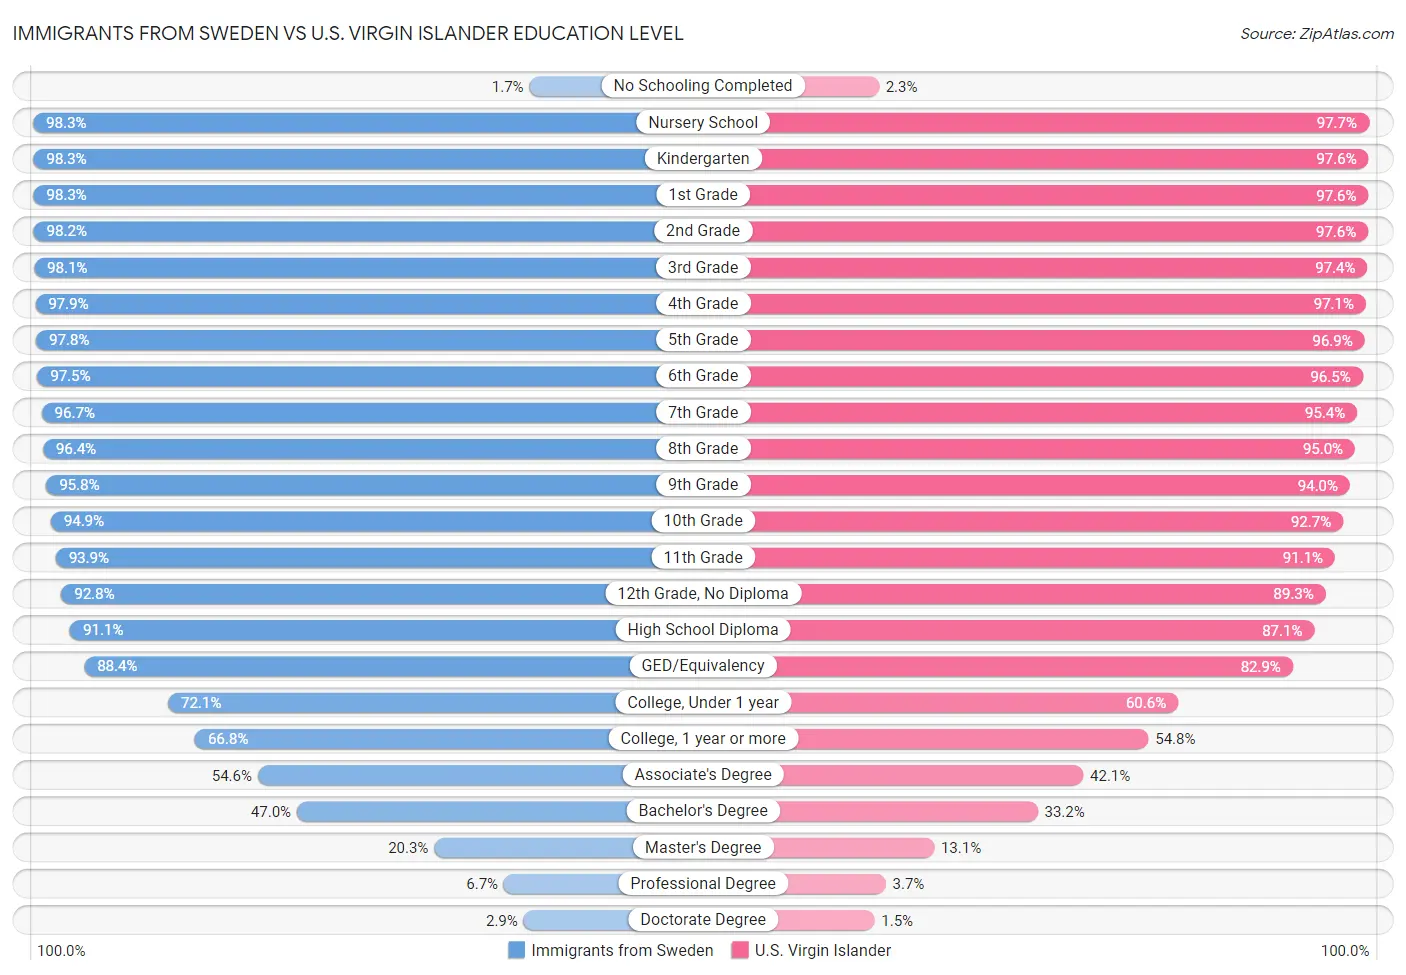 Immigrants from Sweden vs U.S. Virgin Islander Education Level